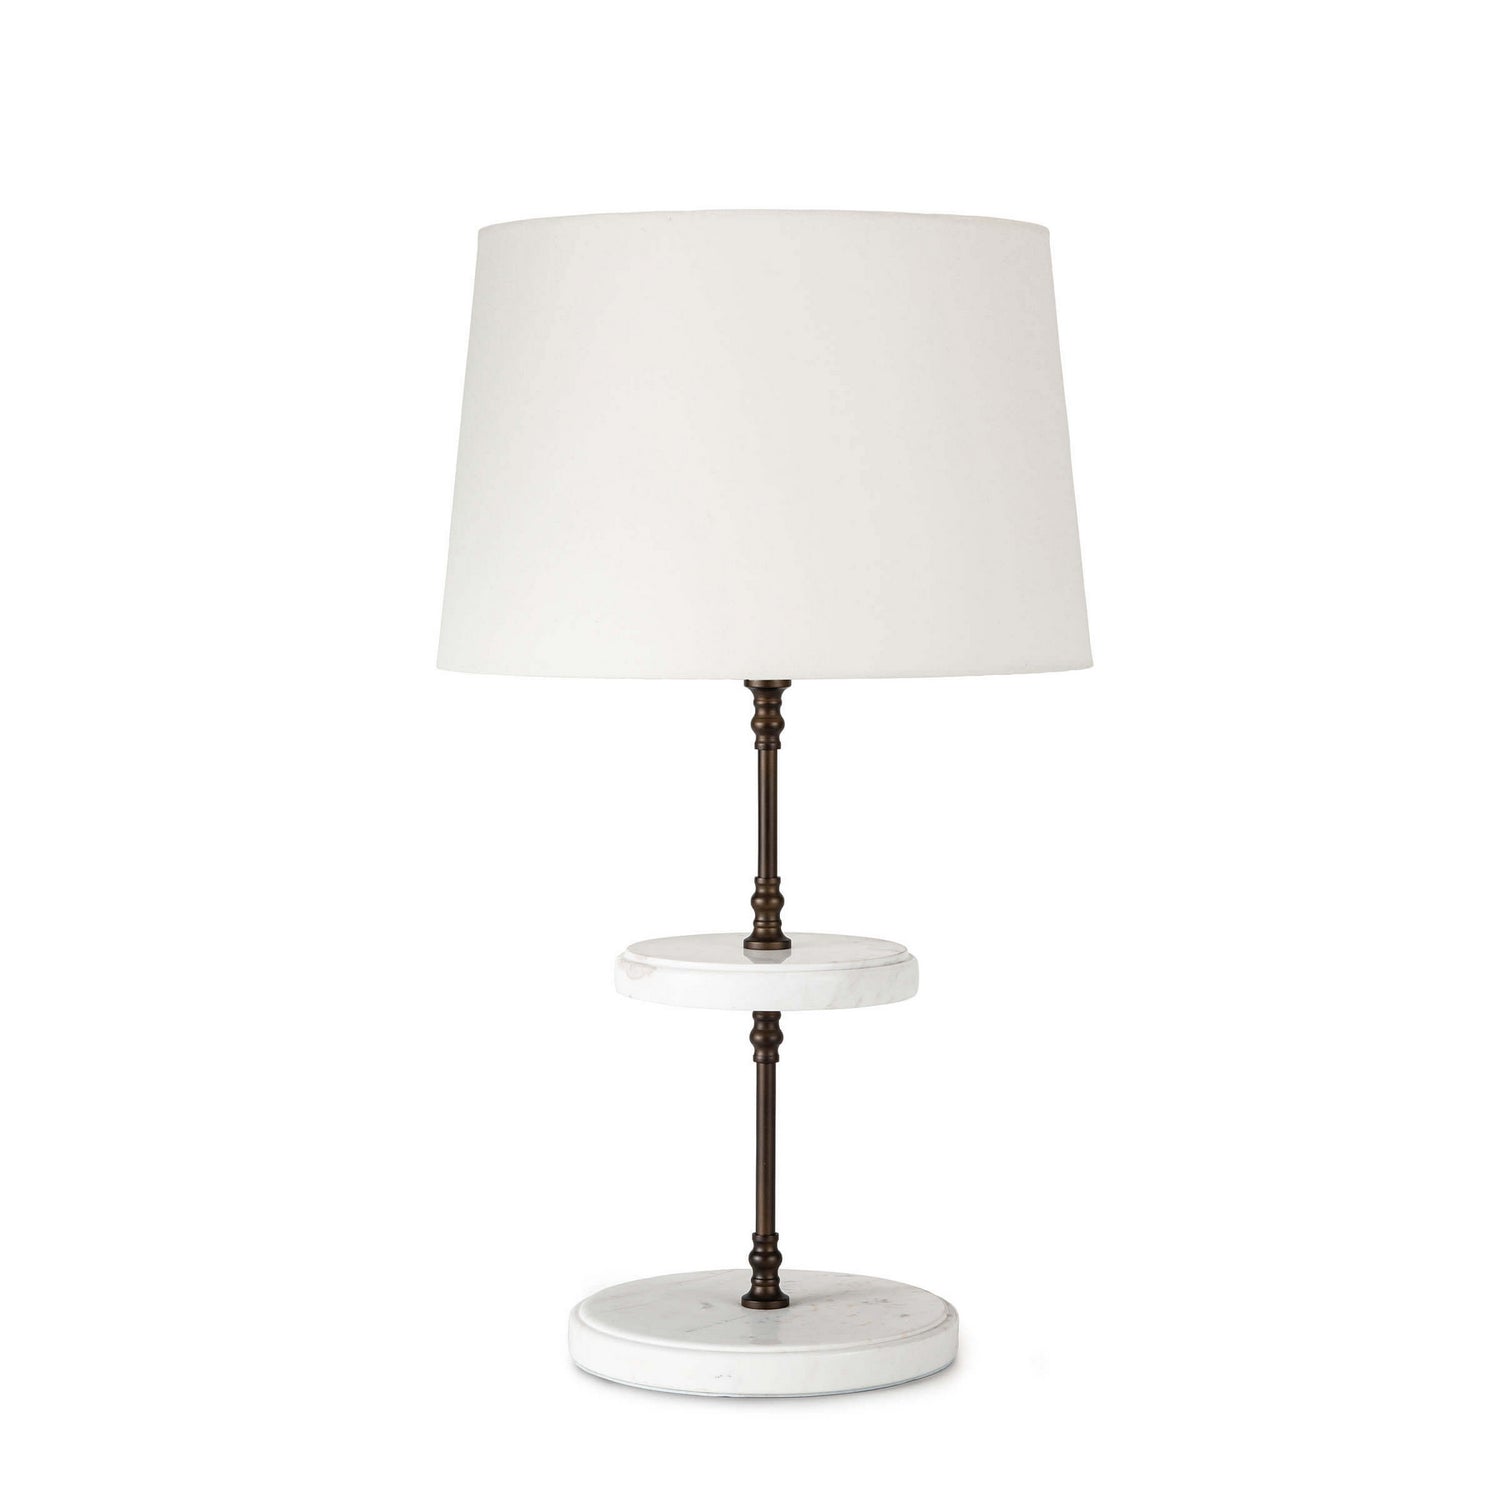 Regina Andrew - 13-1434ORB - One Light Table Lamp - Bistro - Oil Rubbed Bronze